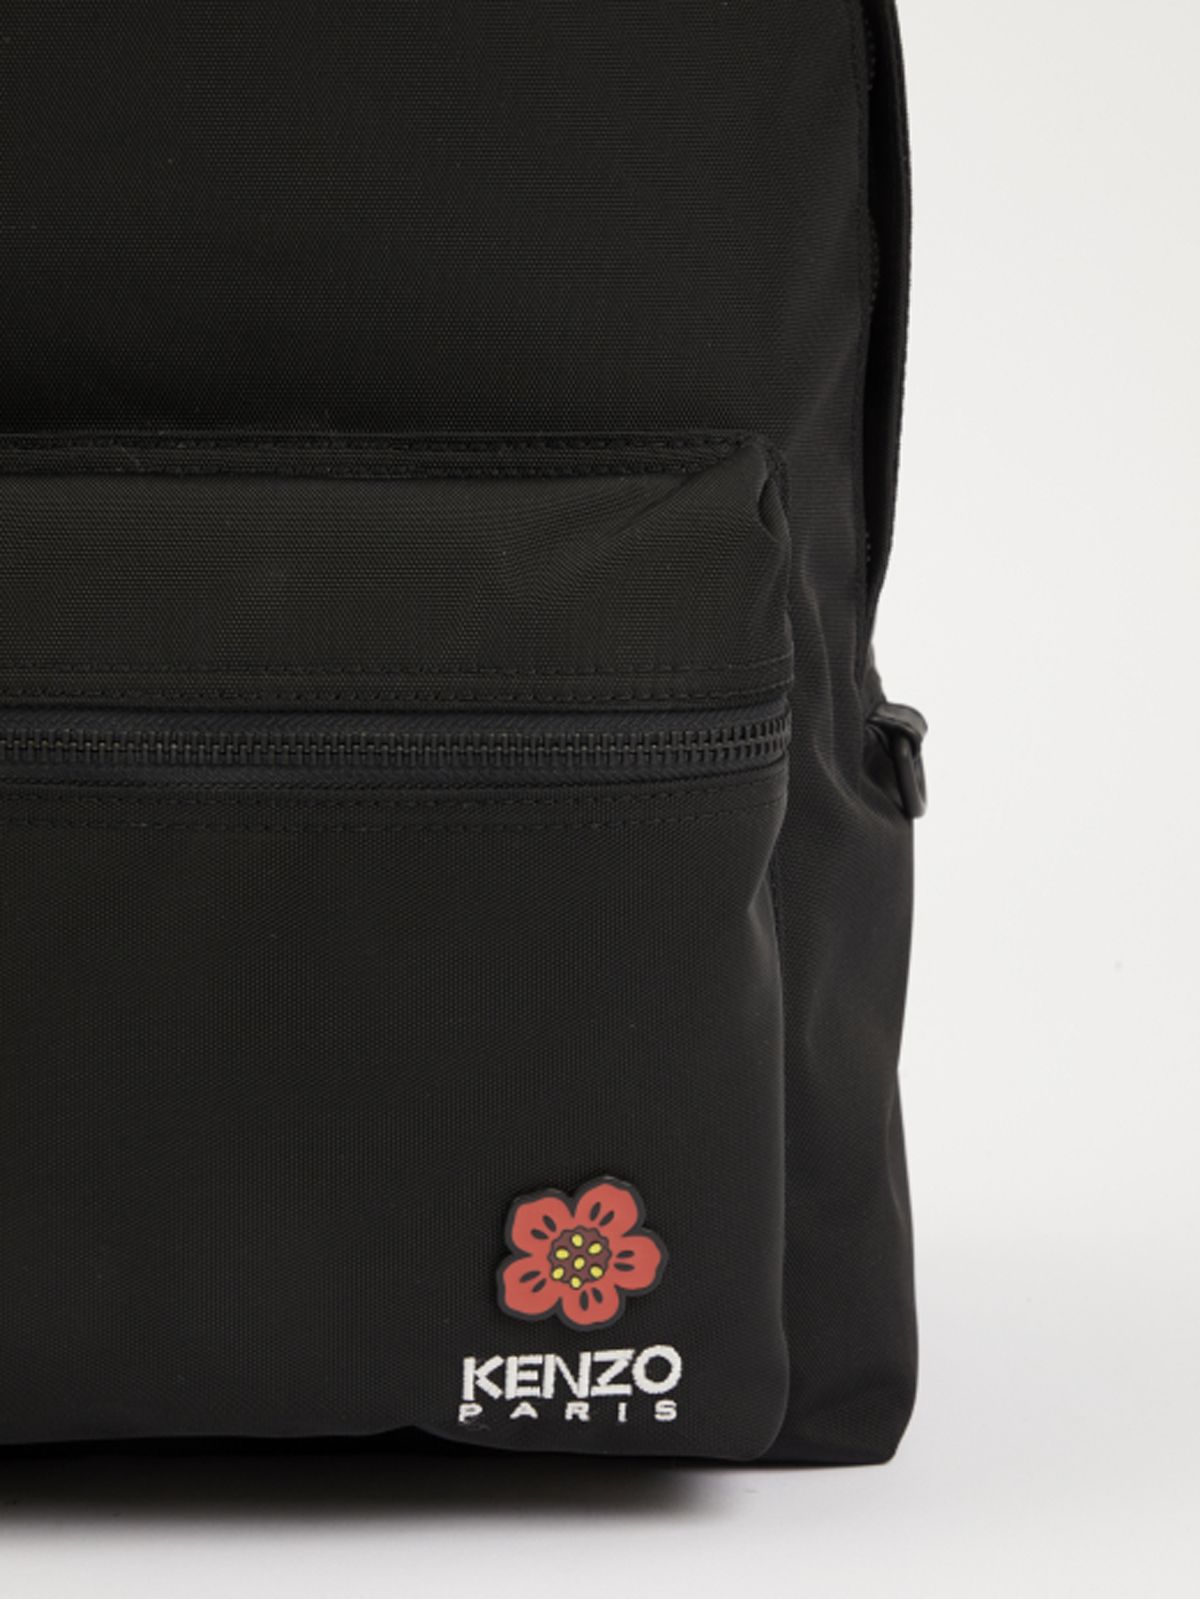 KENZO - 【ラスト1点】 Kenzo Crest Boke Flower Backpack / バック